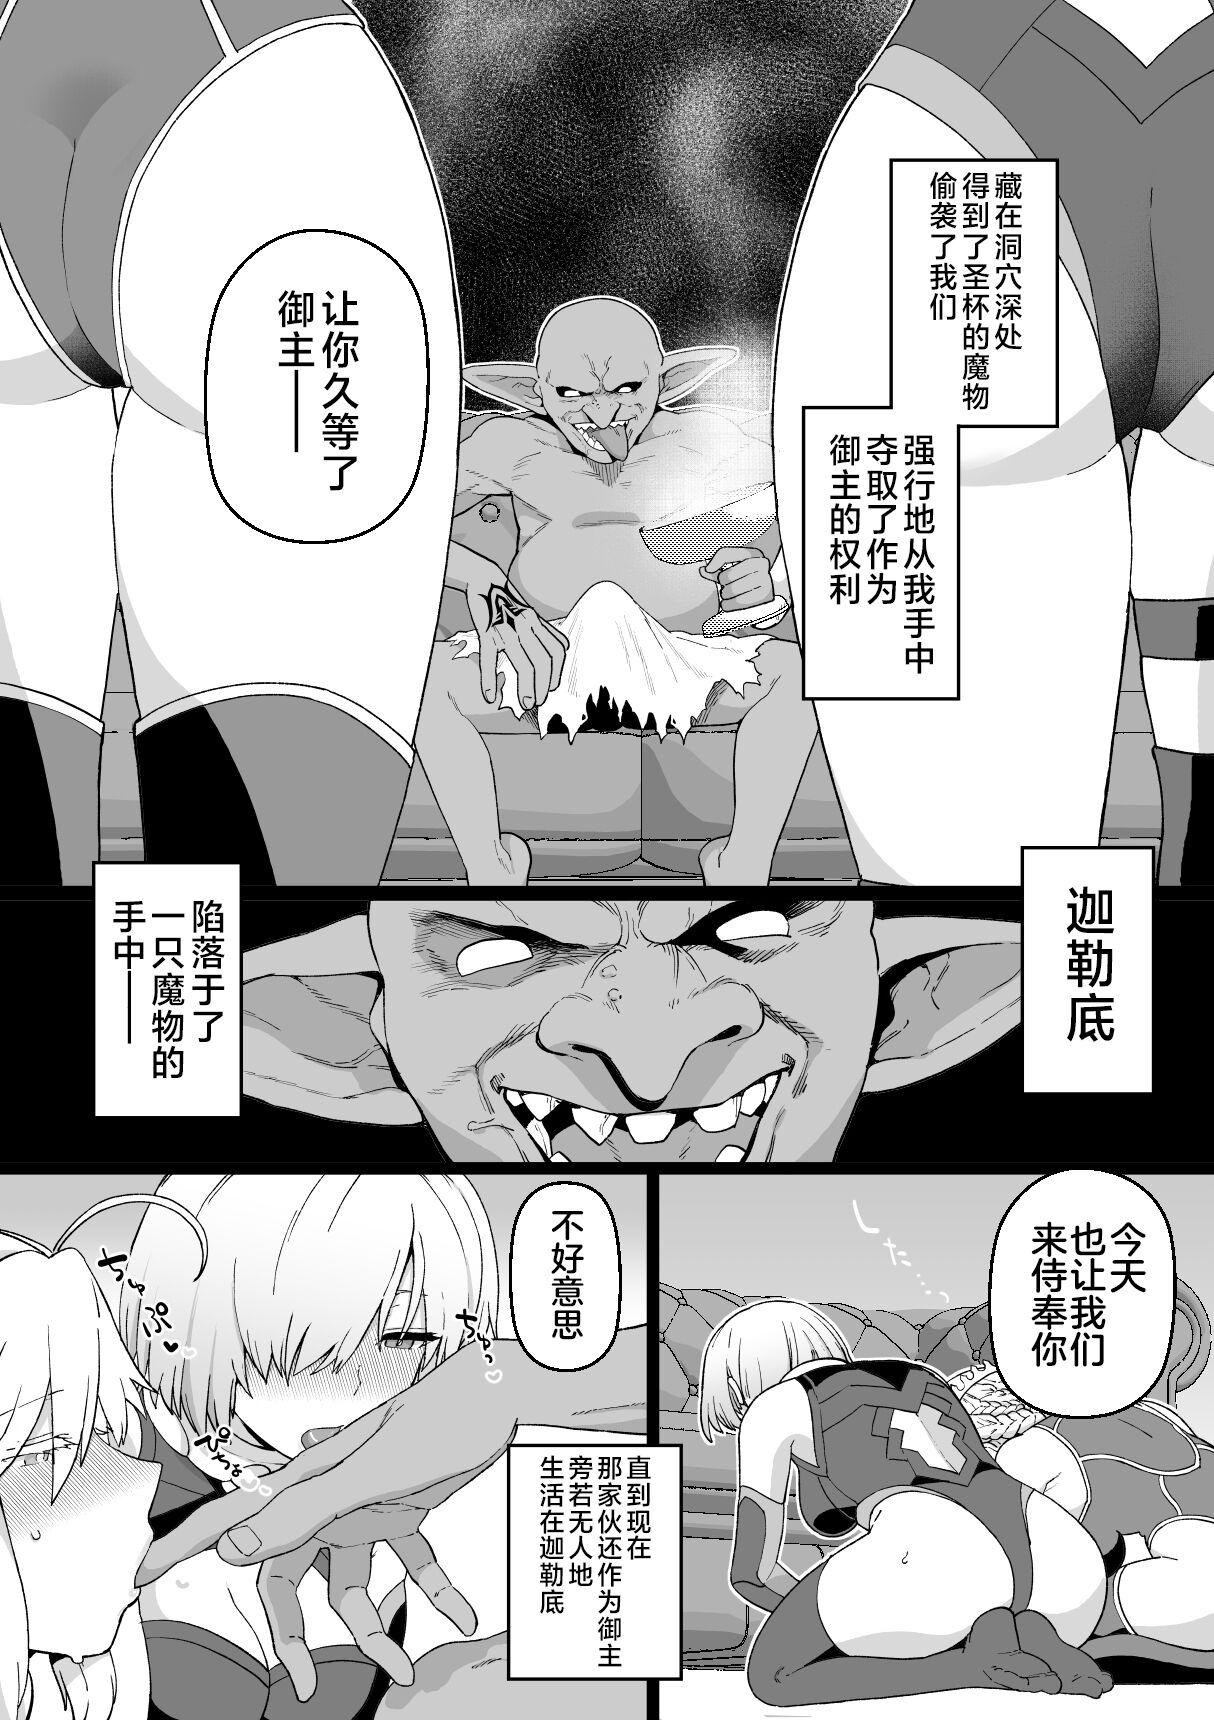 Groupsex Artoria to Mash, Goblin Kan Manga - Fate grand order Buttfucking - Picture 2